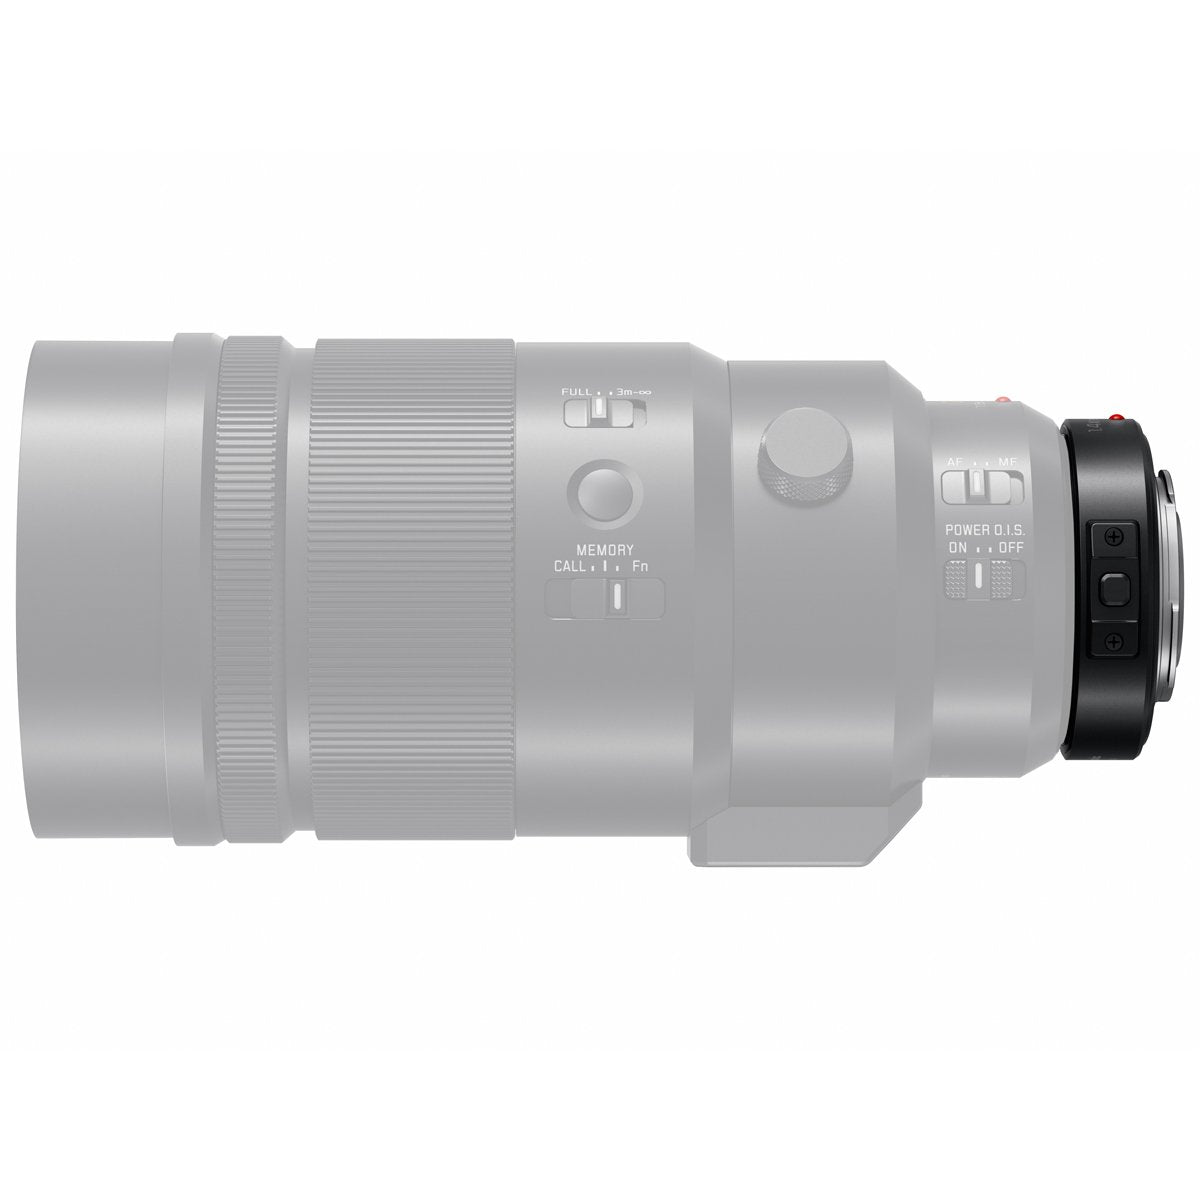 Panasonic Leica 200mm f2.8 ASPH DG Micro Four Thirds Lens *OPEN BOX*